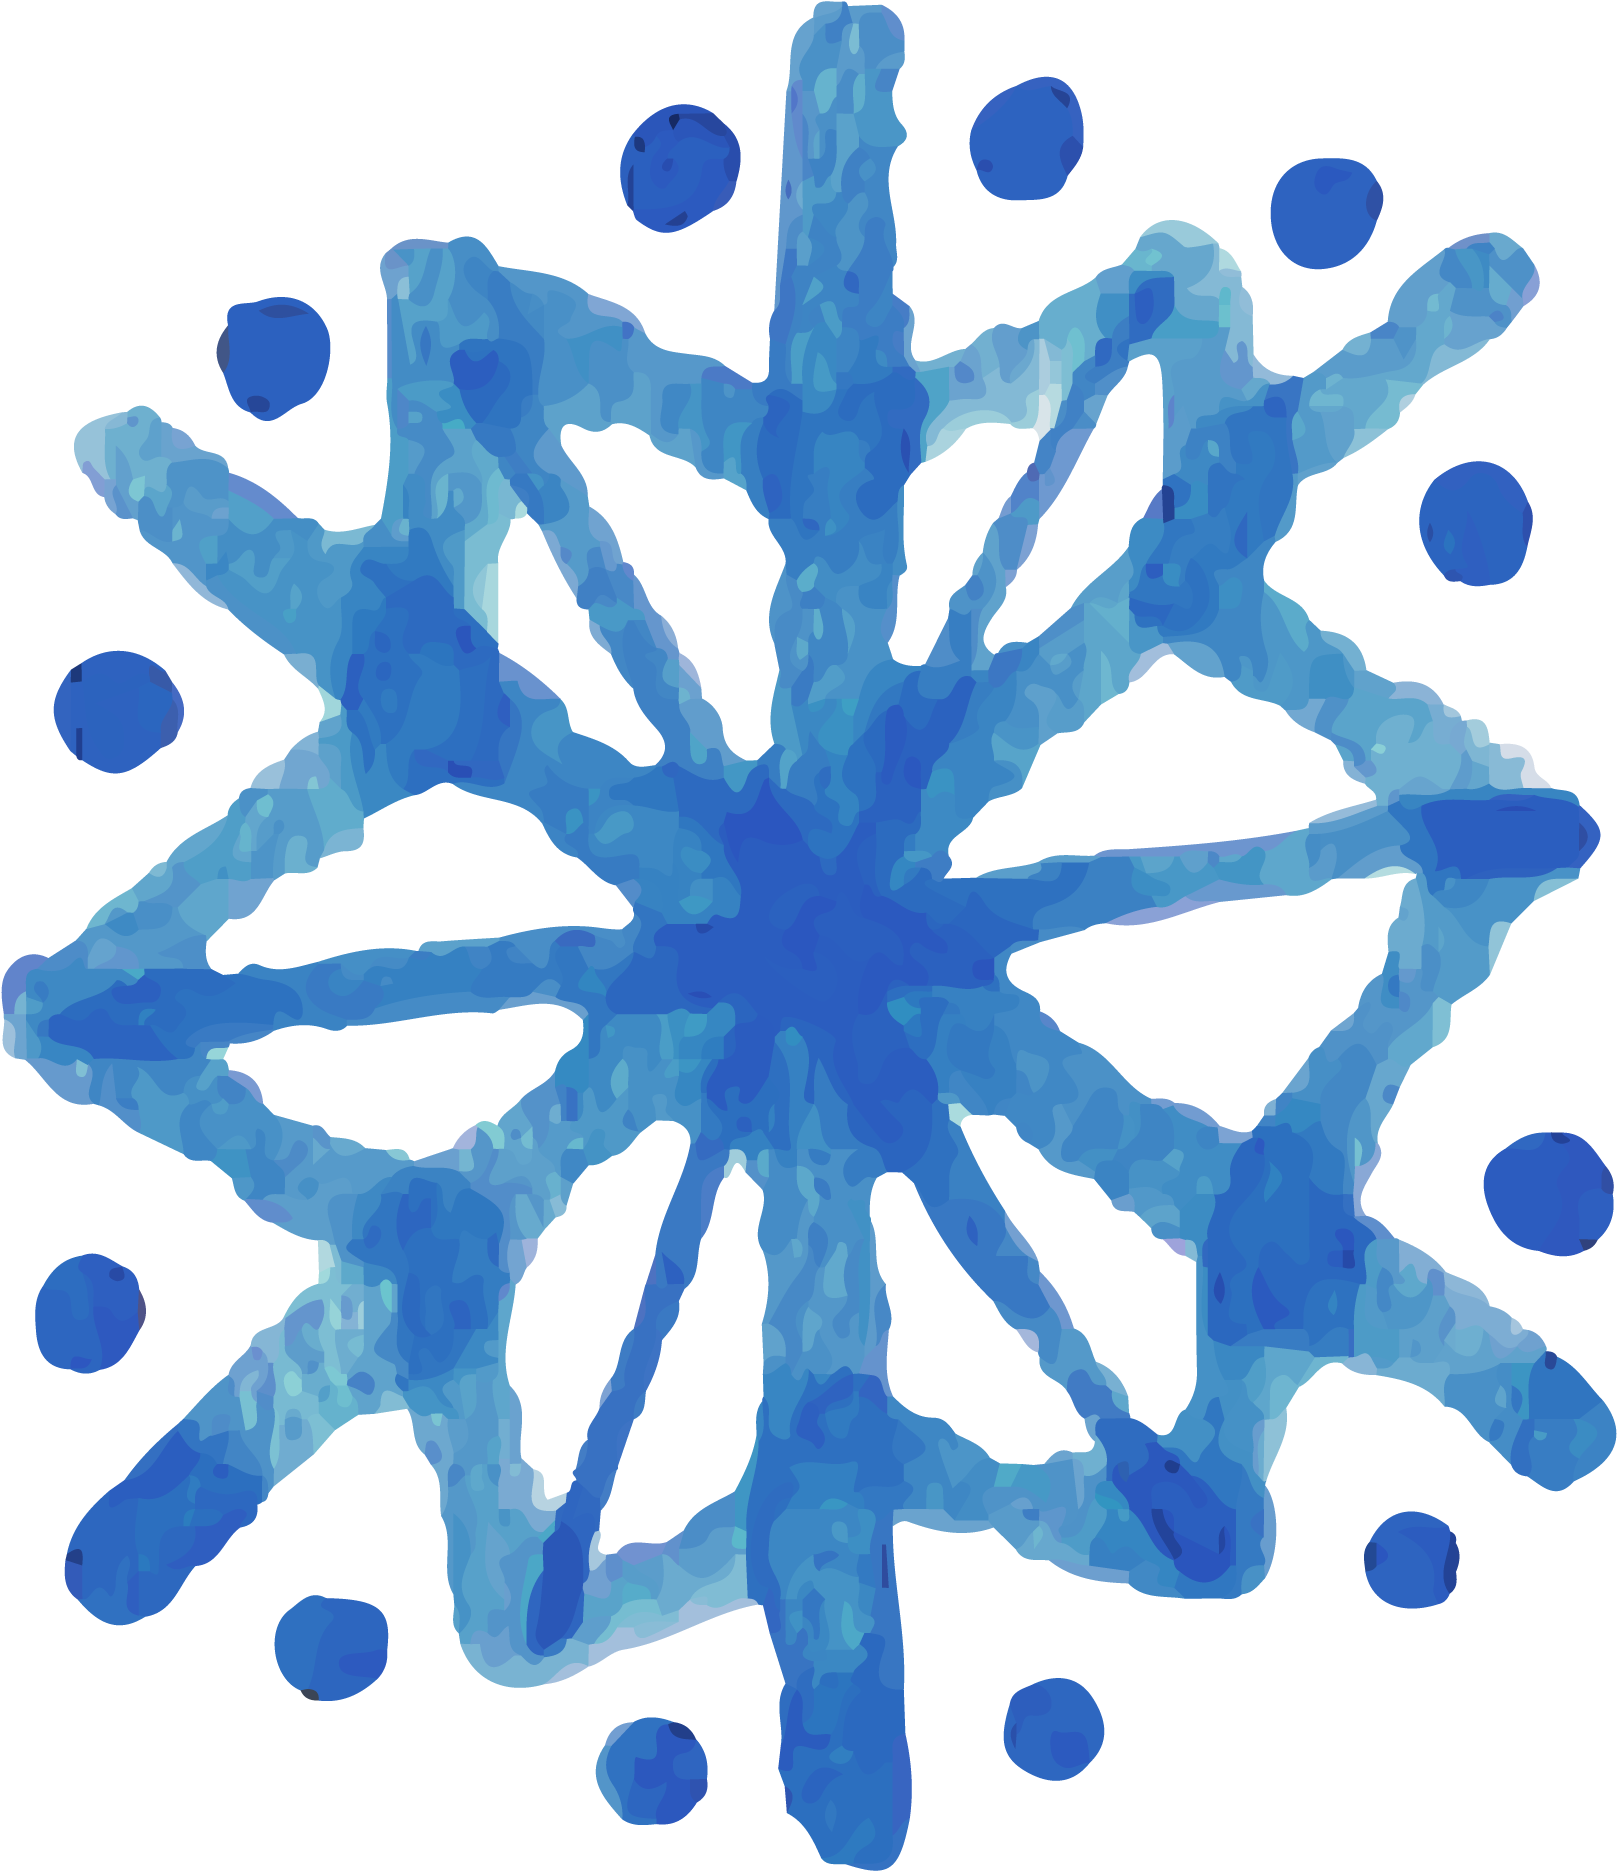 Snowflake Watercolor Painting Illustration - Illustration (2000x2000)